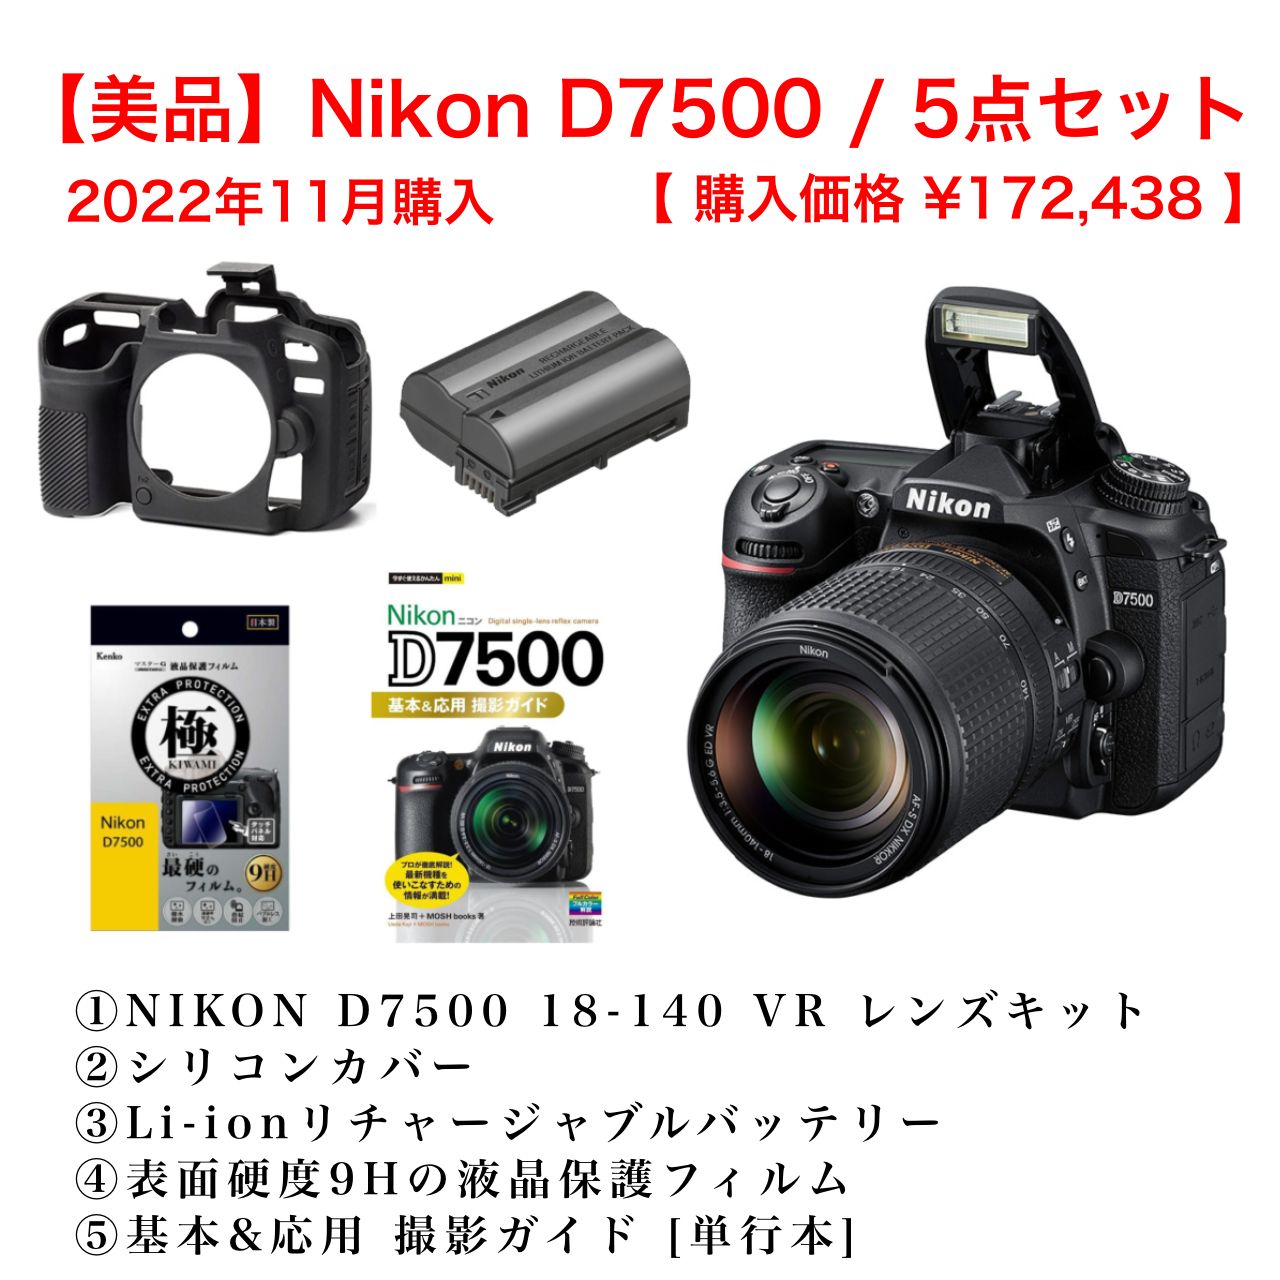 Nikon D7500 18-140 VR Kit 美品 デジタル一眼レフ - www.sorbillomenu.com